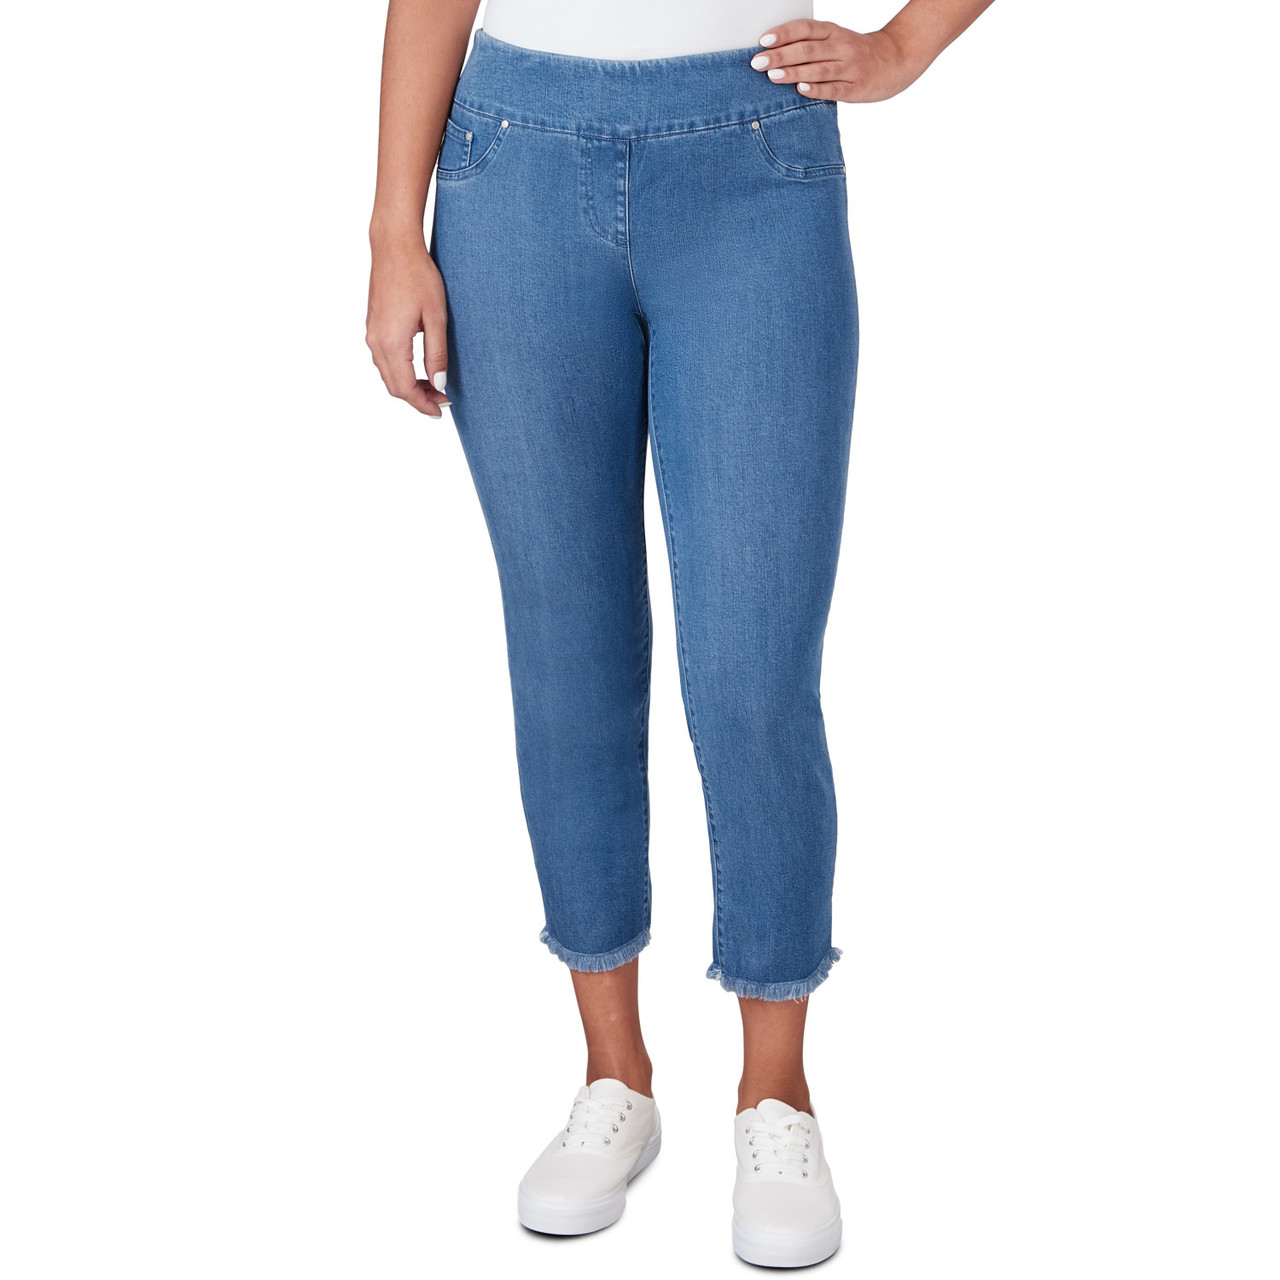 Plus Size Women's Capri Stretch Jean by Woman Within in Medium